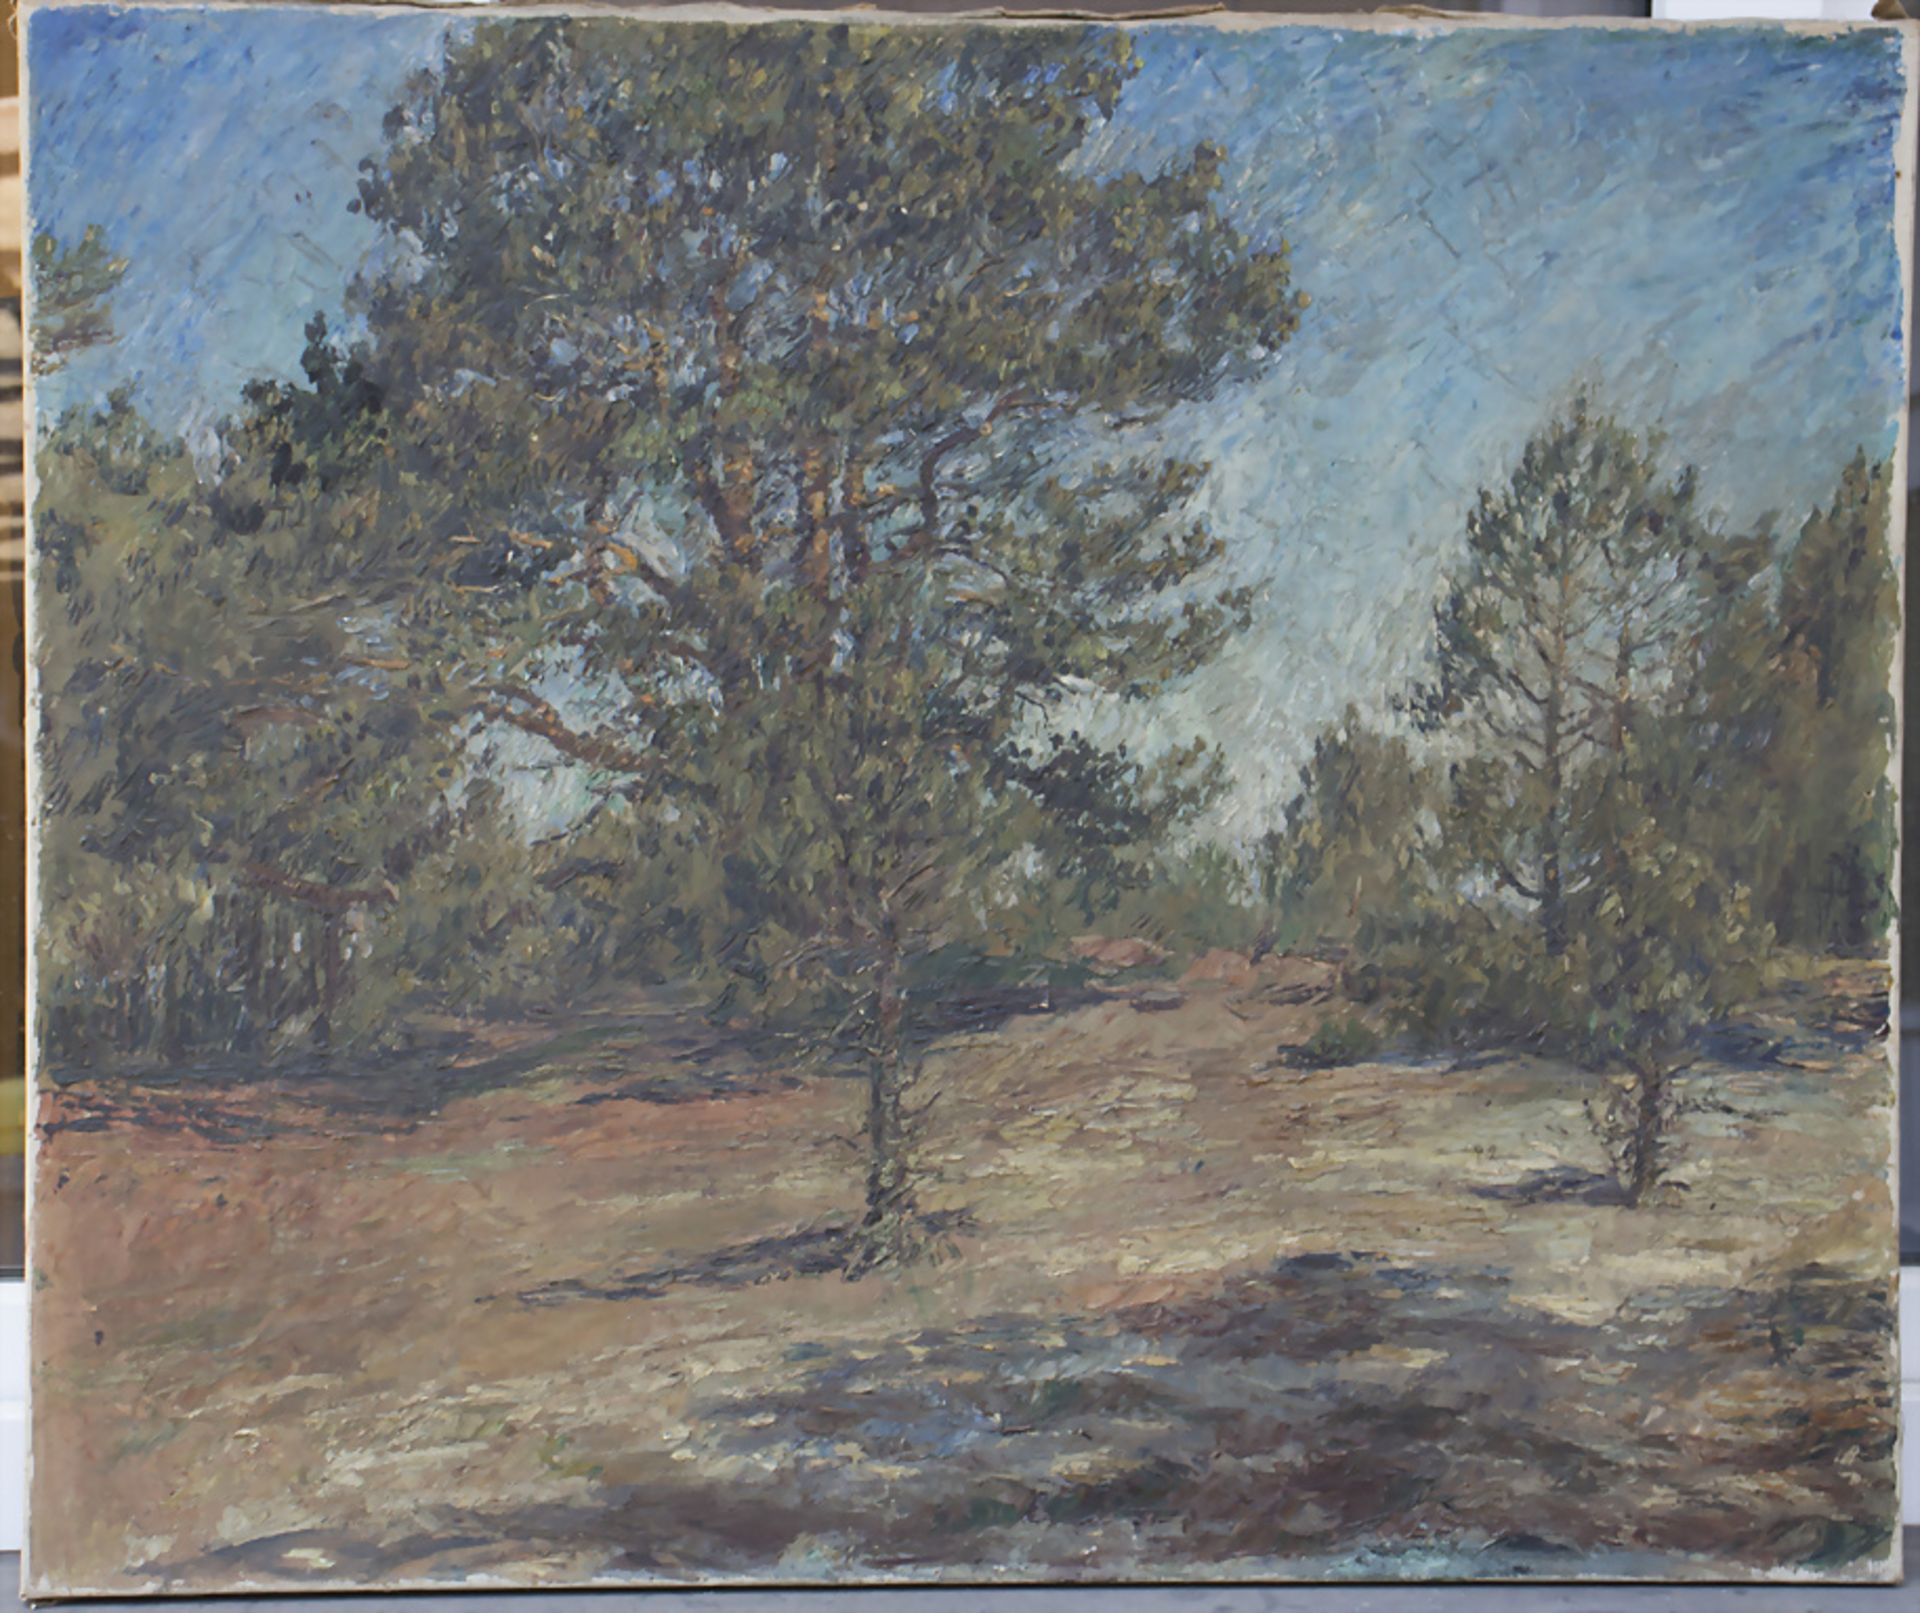 Künstler um 1900, 'Impressionistische Baumlandschaft' / 'An impressionistic landscape with trees'